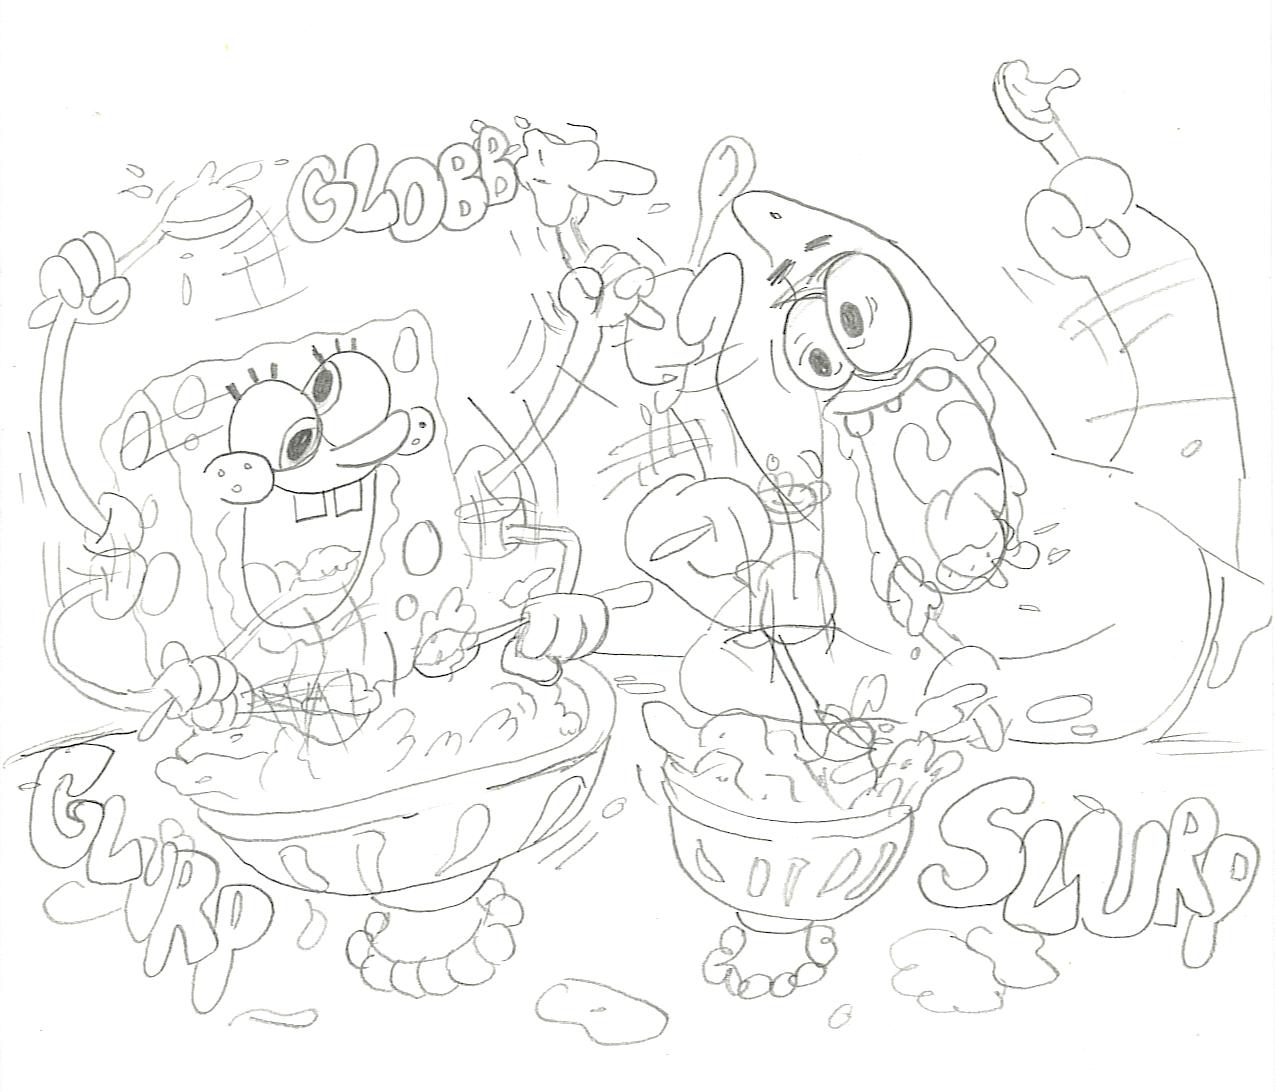 Ice Cream Monsters!!! by sonicsusie